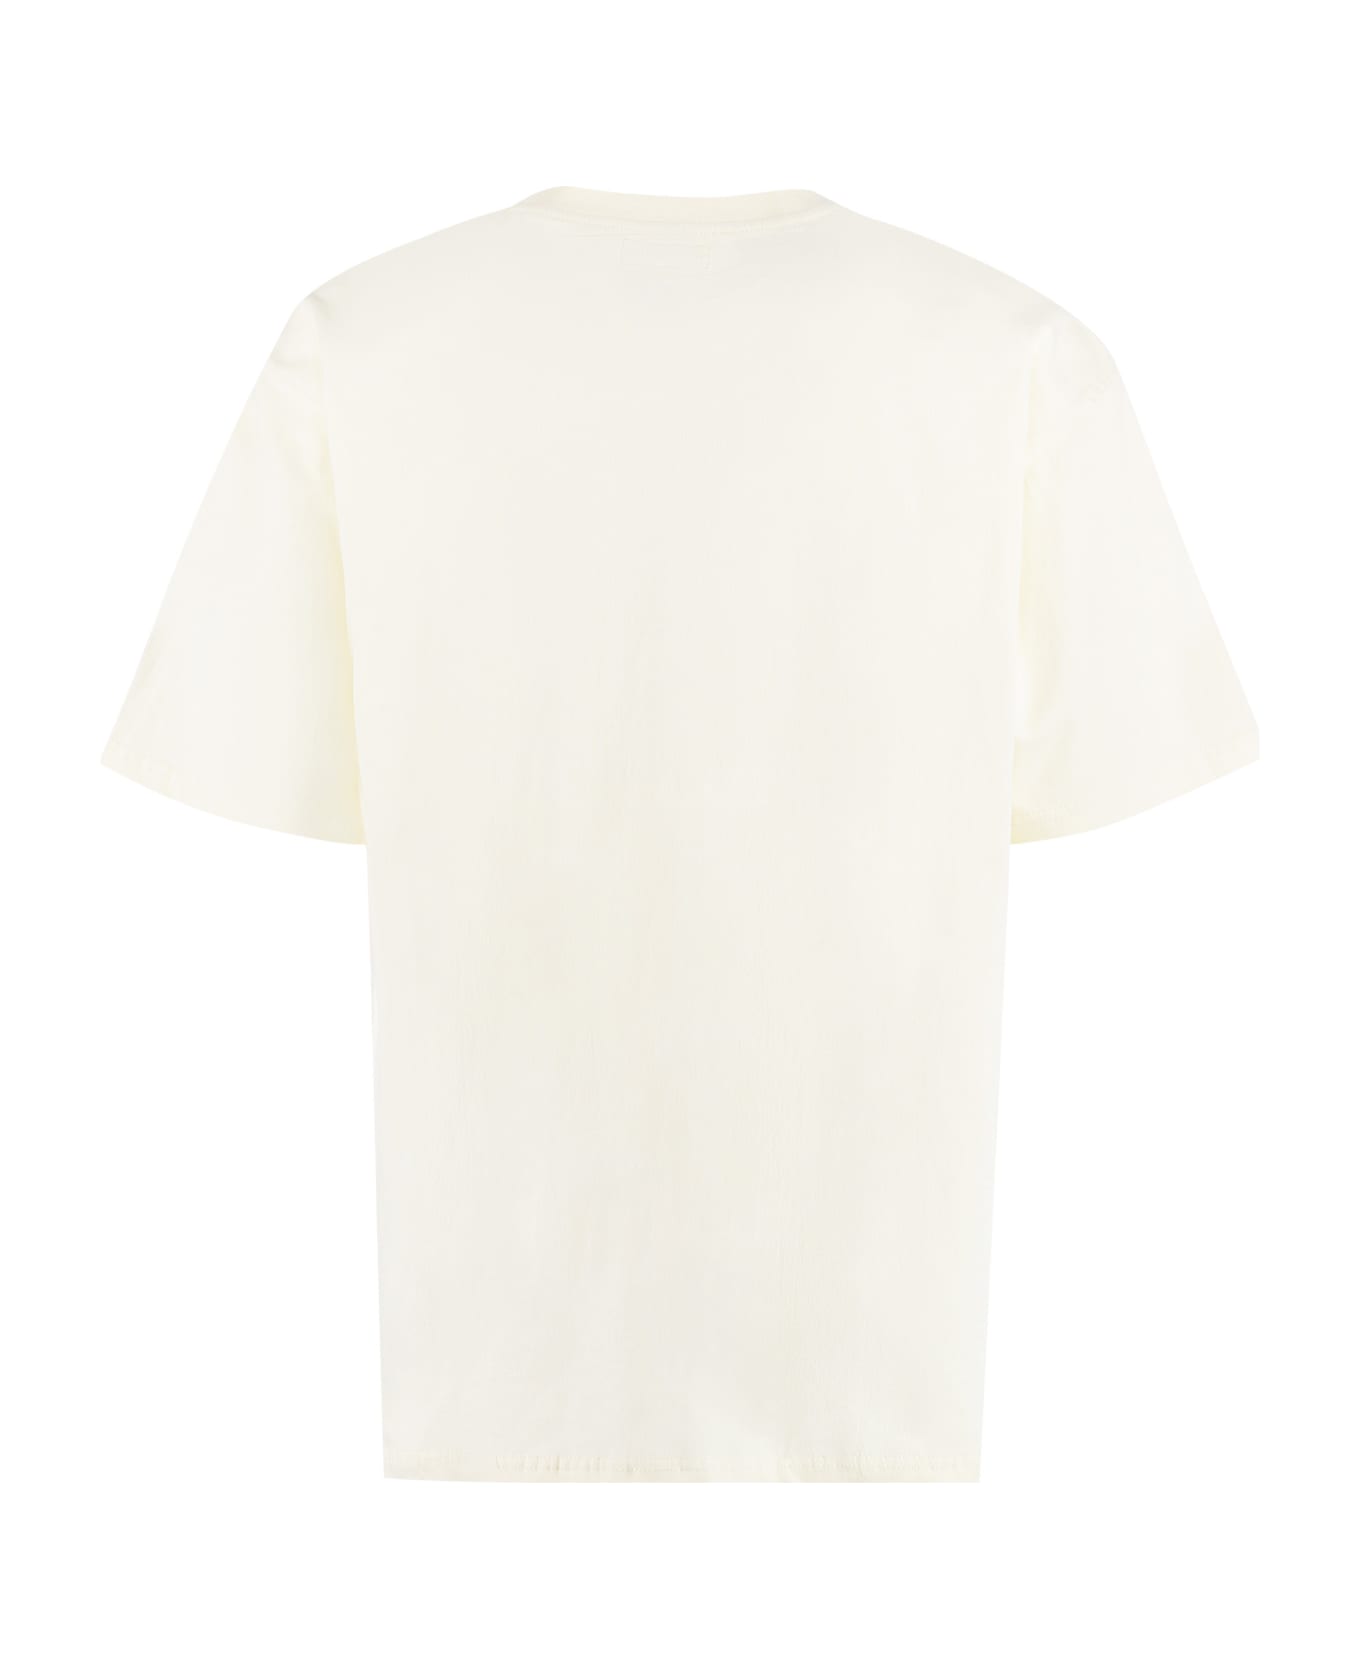 Market Printed Cotton T-shirt - panna